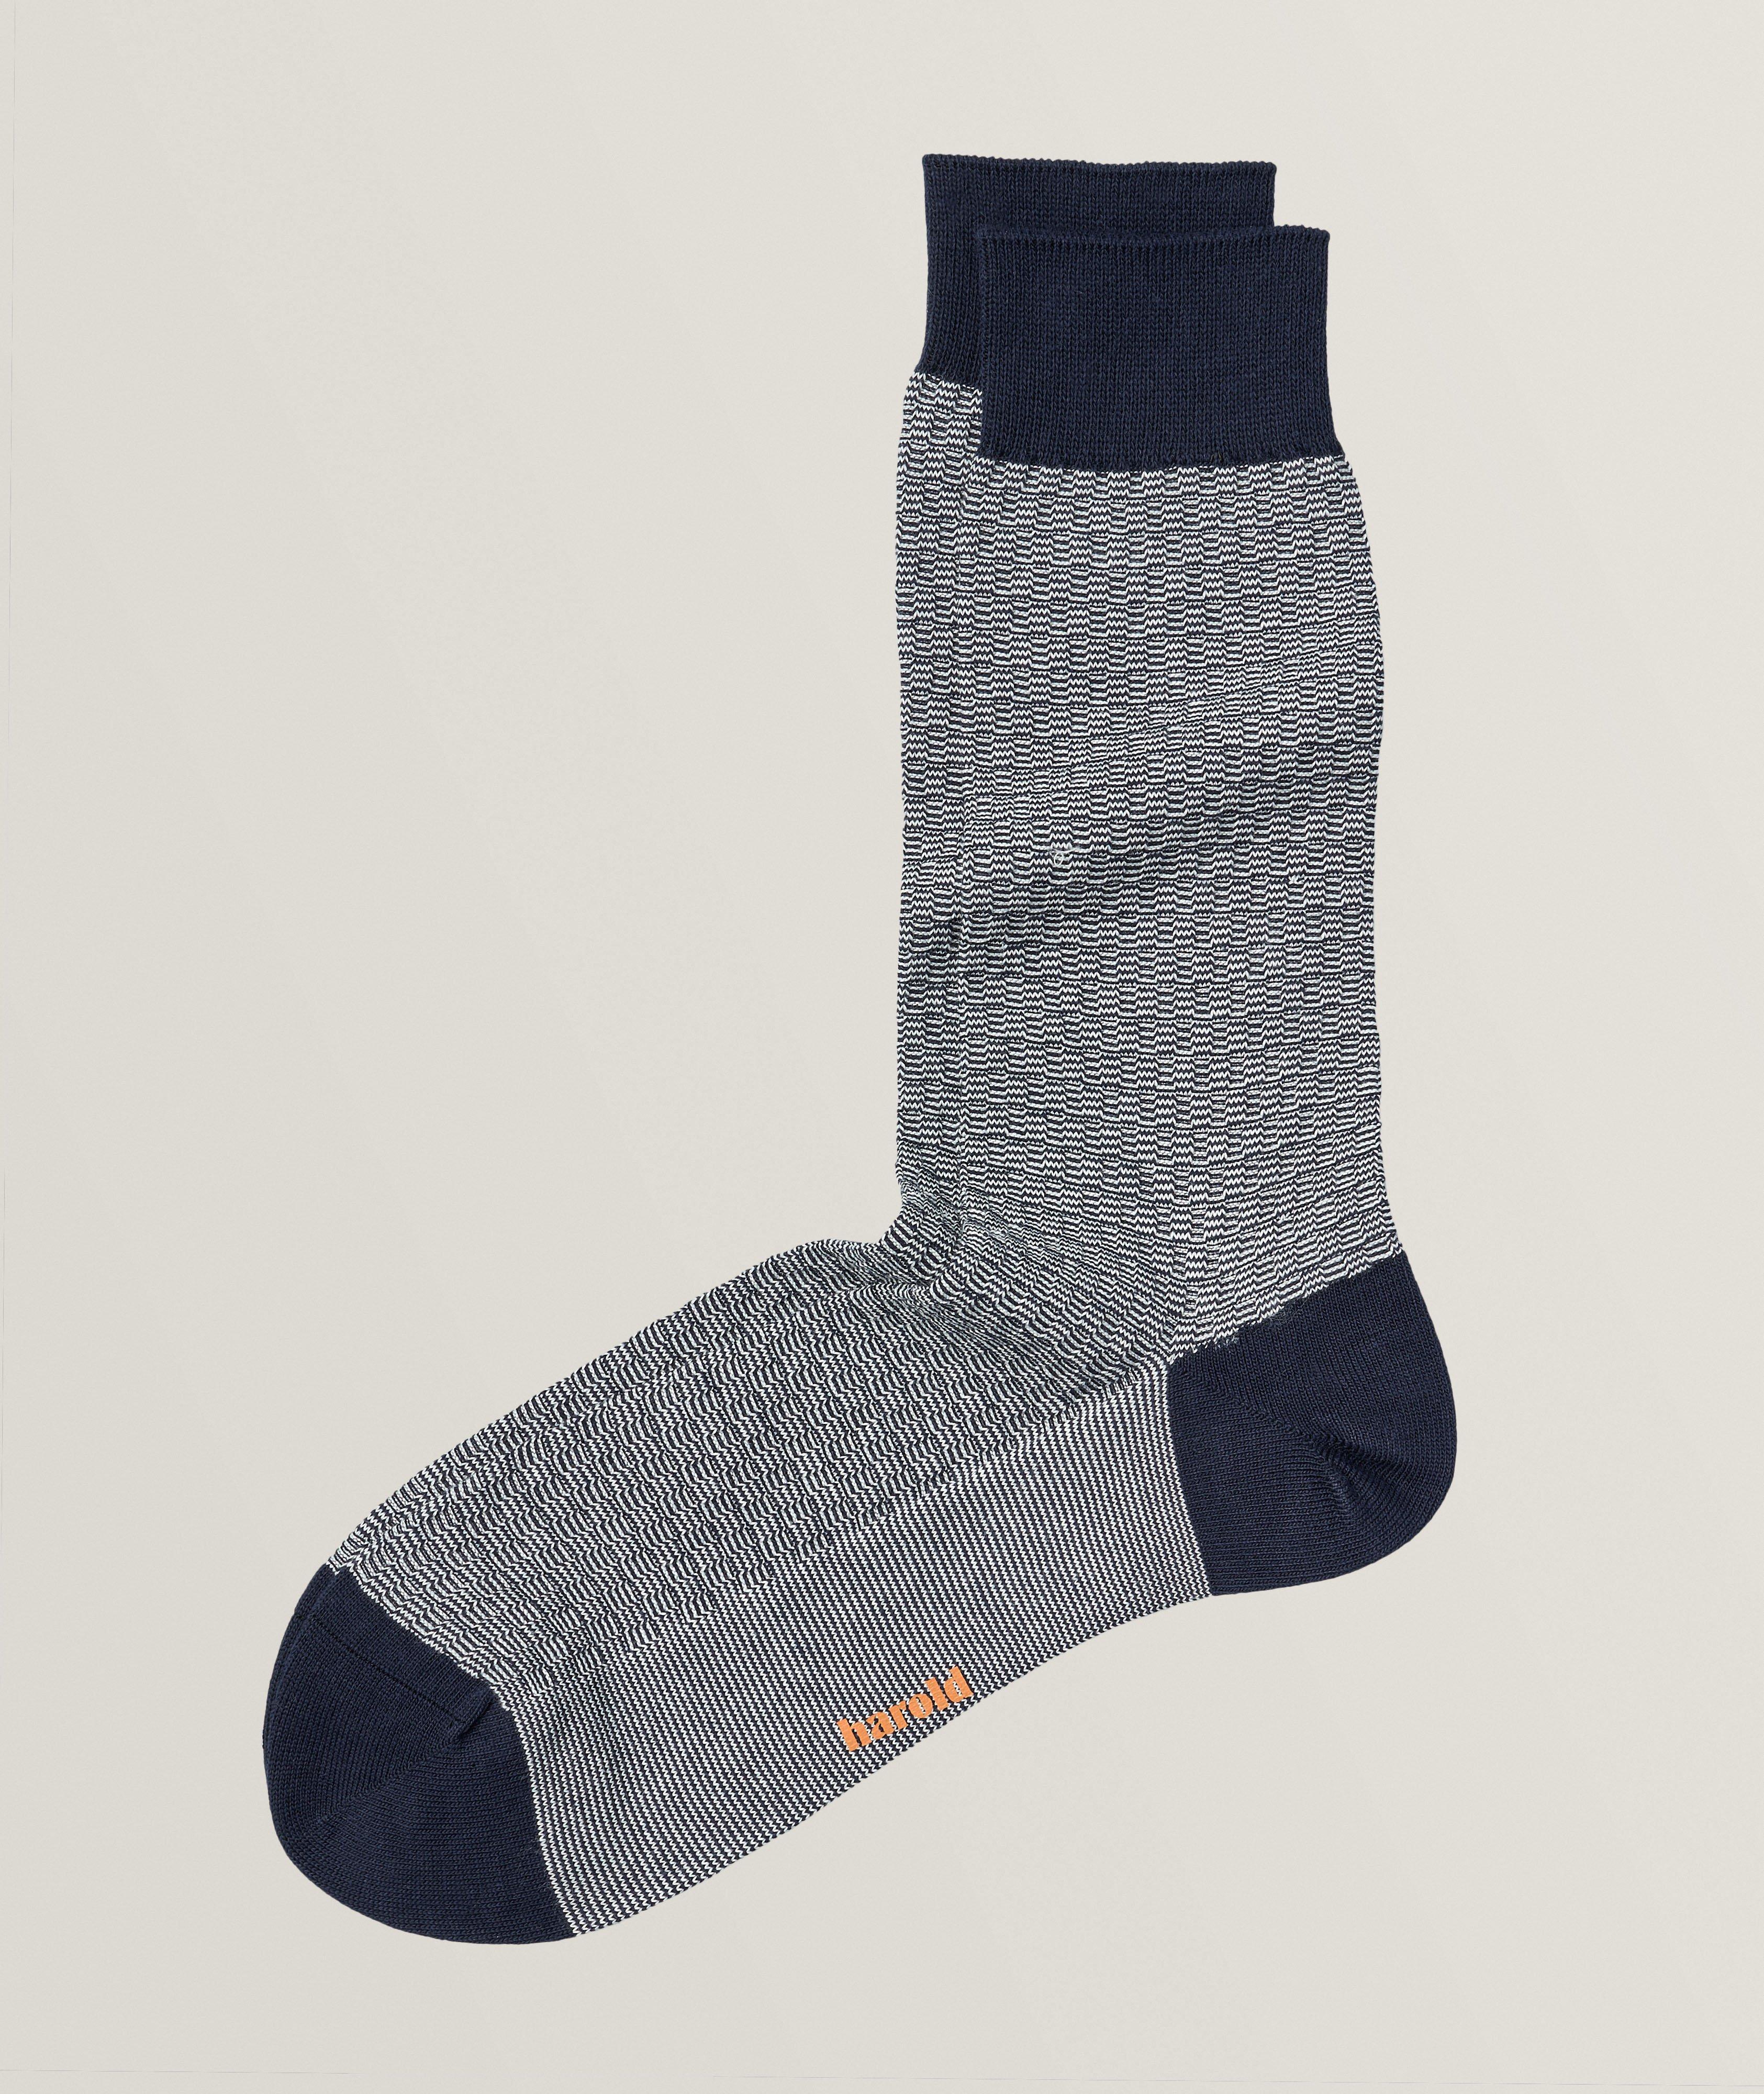 Checkered Basketweave Mercerized Cotton-Nylon Socks image 0